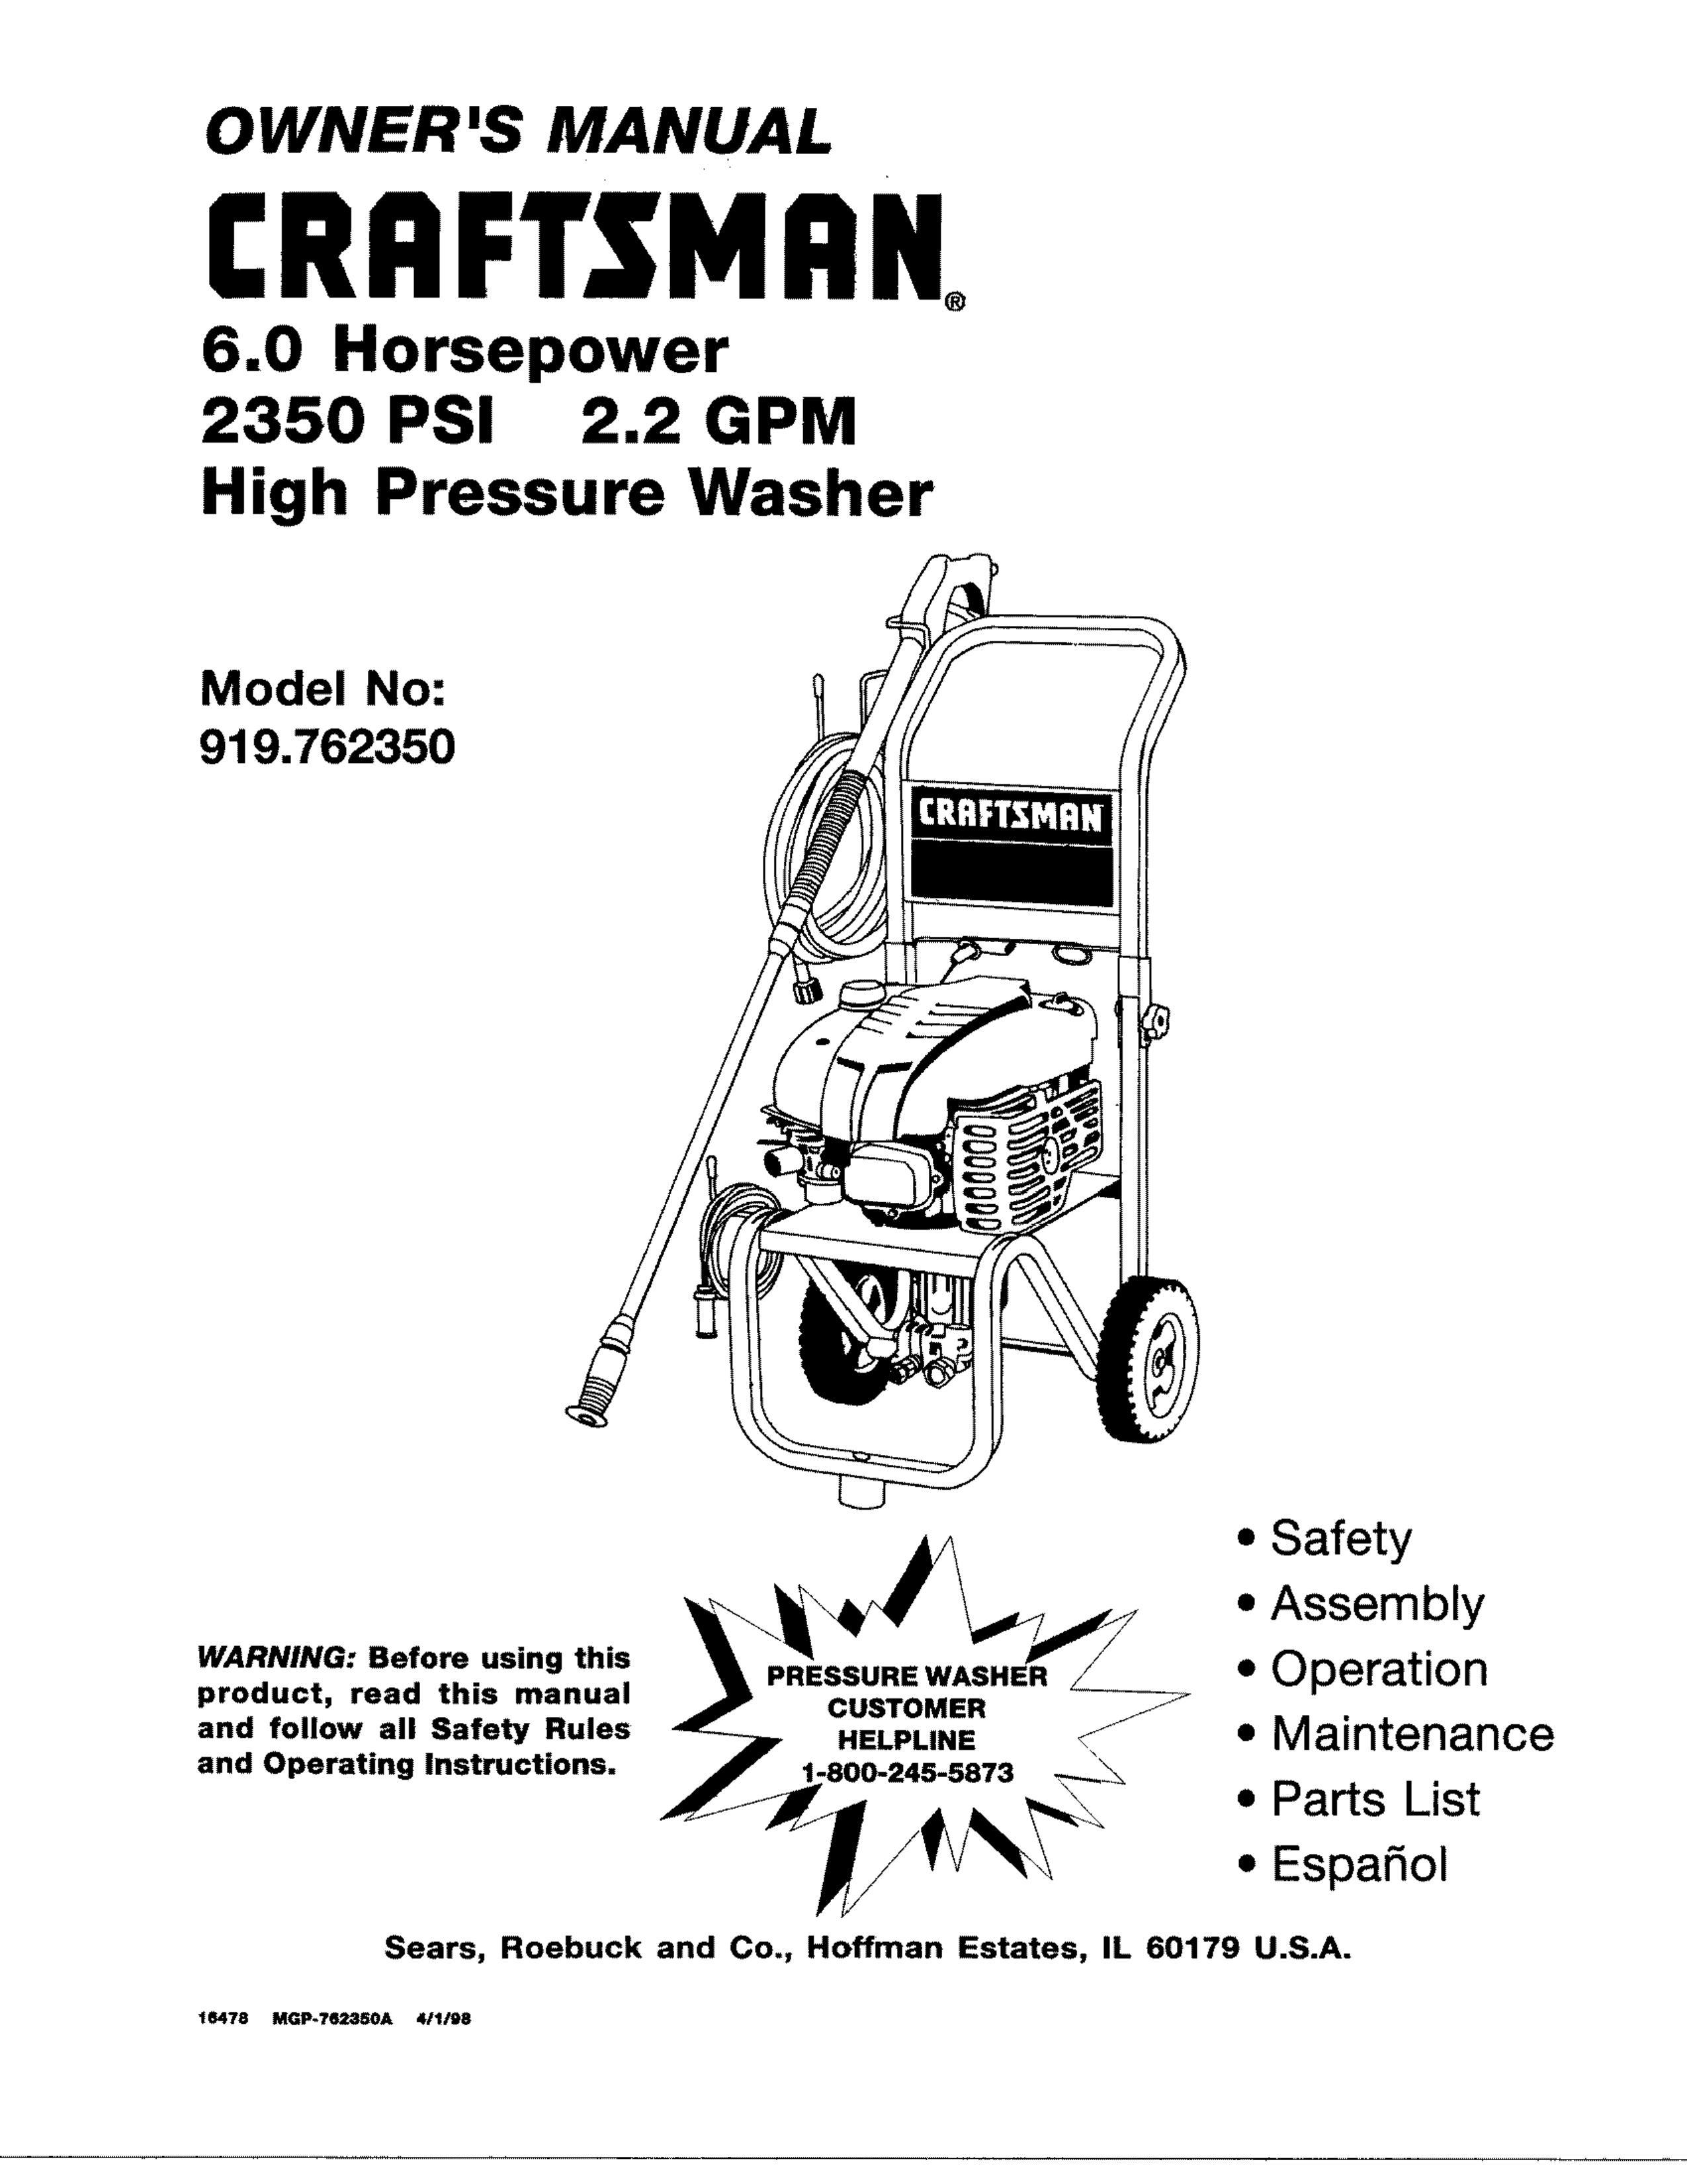 Craftsman 919.76235 Pressure Washer User Manual